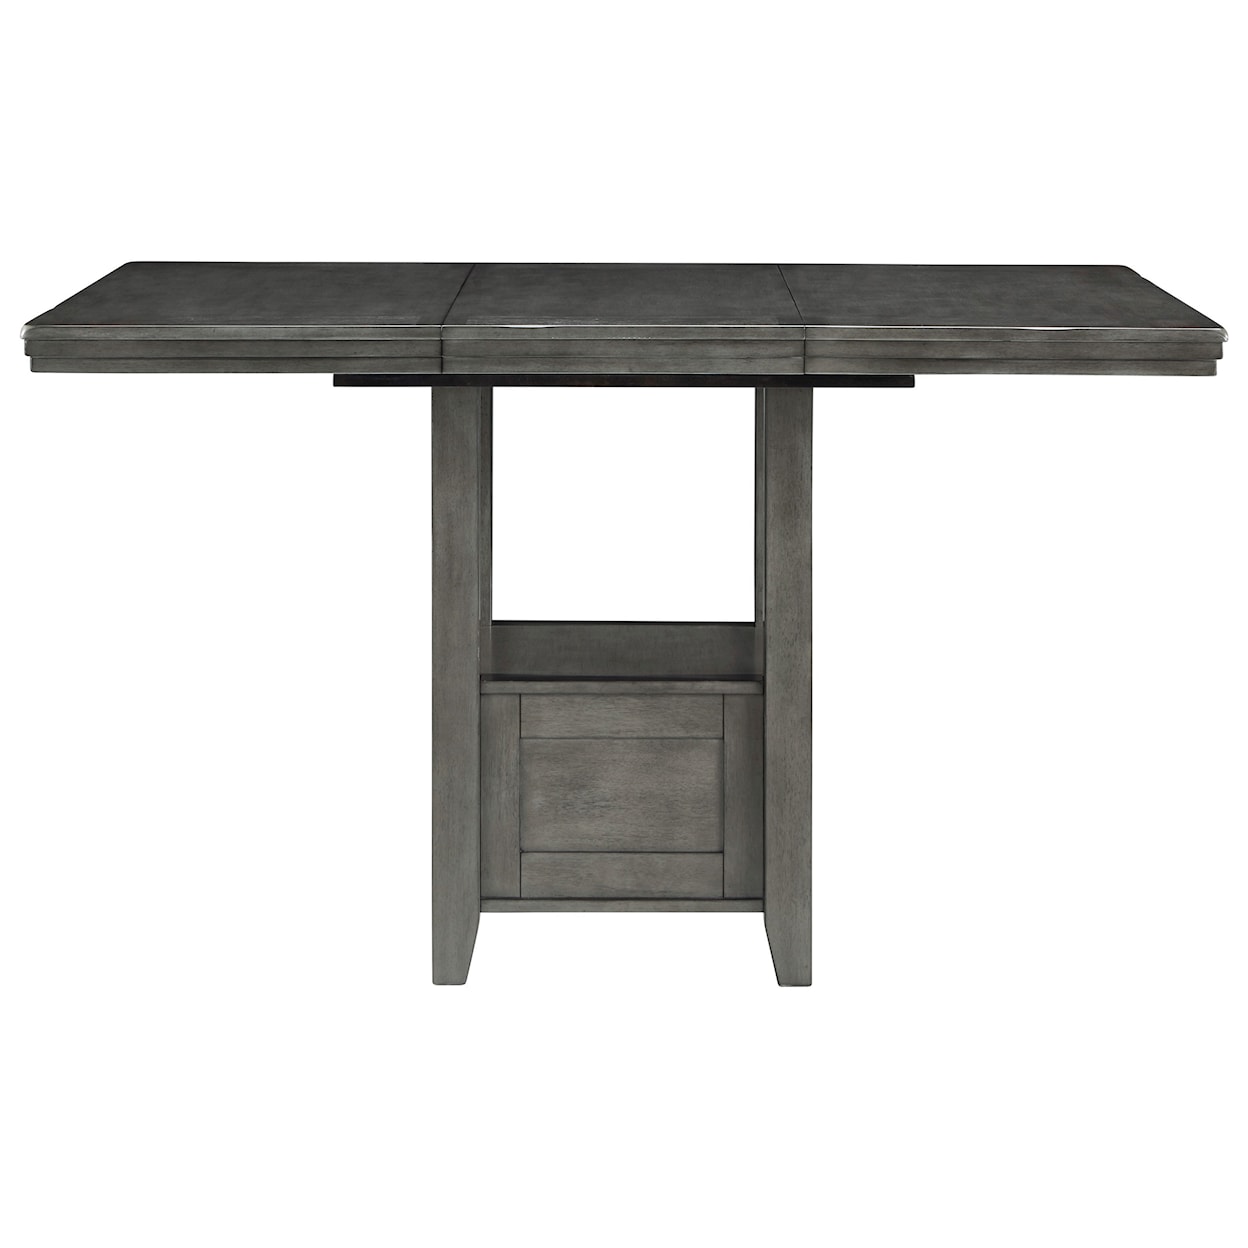 Ashley Furniture Signature Design Hallanden Counter Height Dining Table